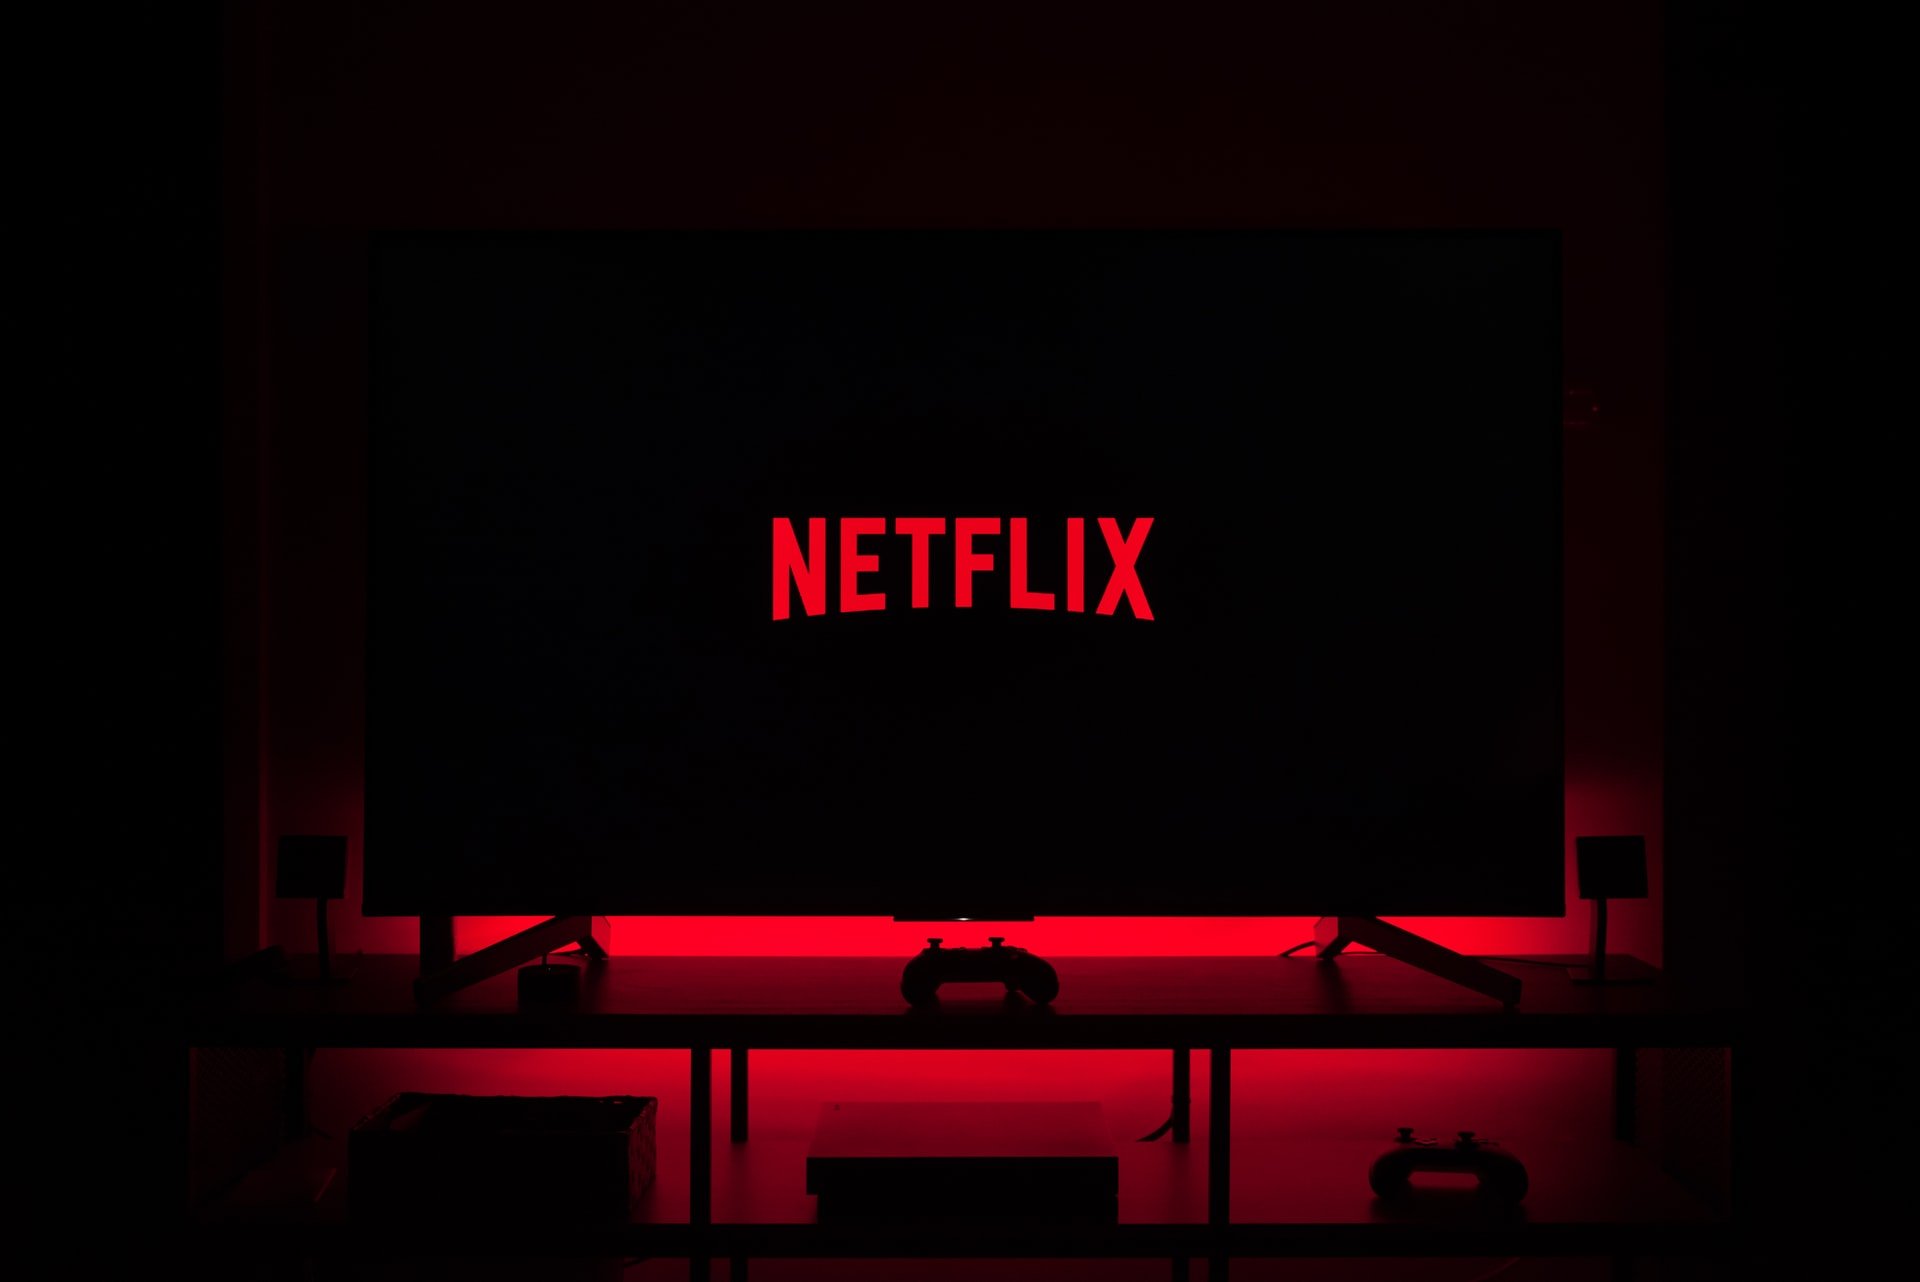 Penjual Netflix ilegal modus penjual akun netflix ilegal liputan mojok.co